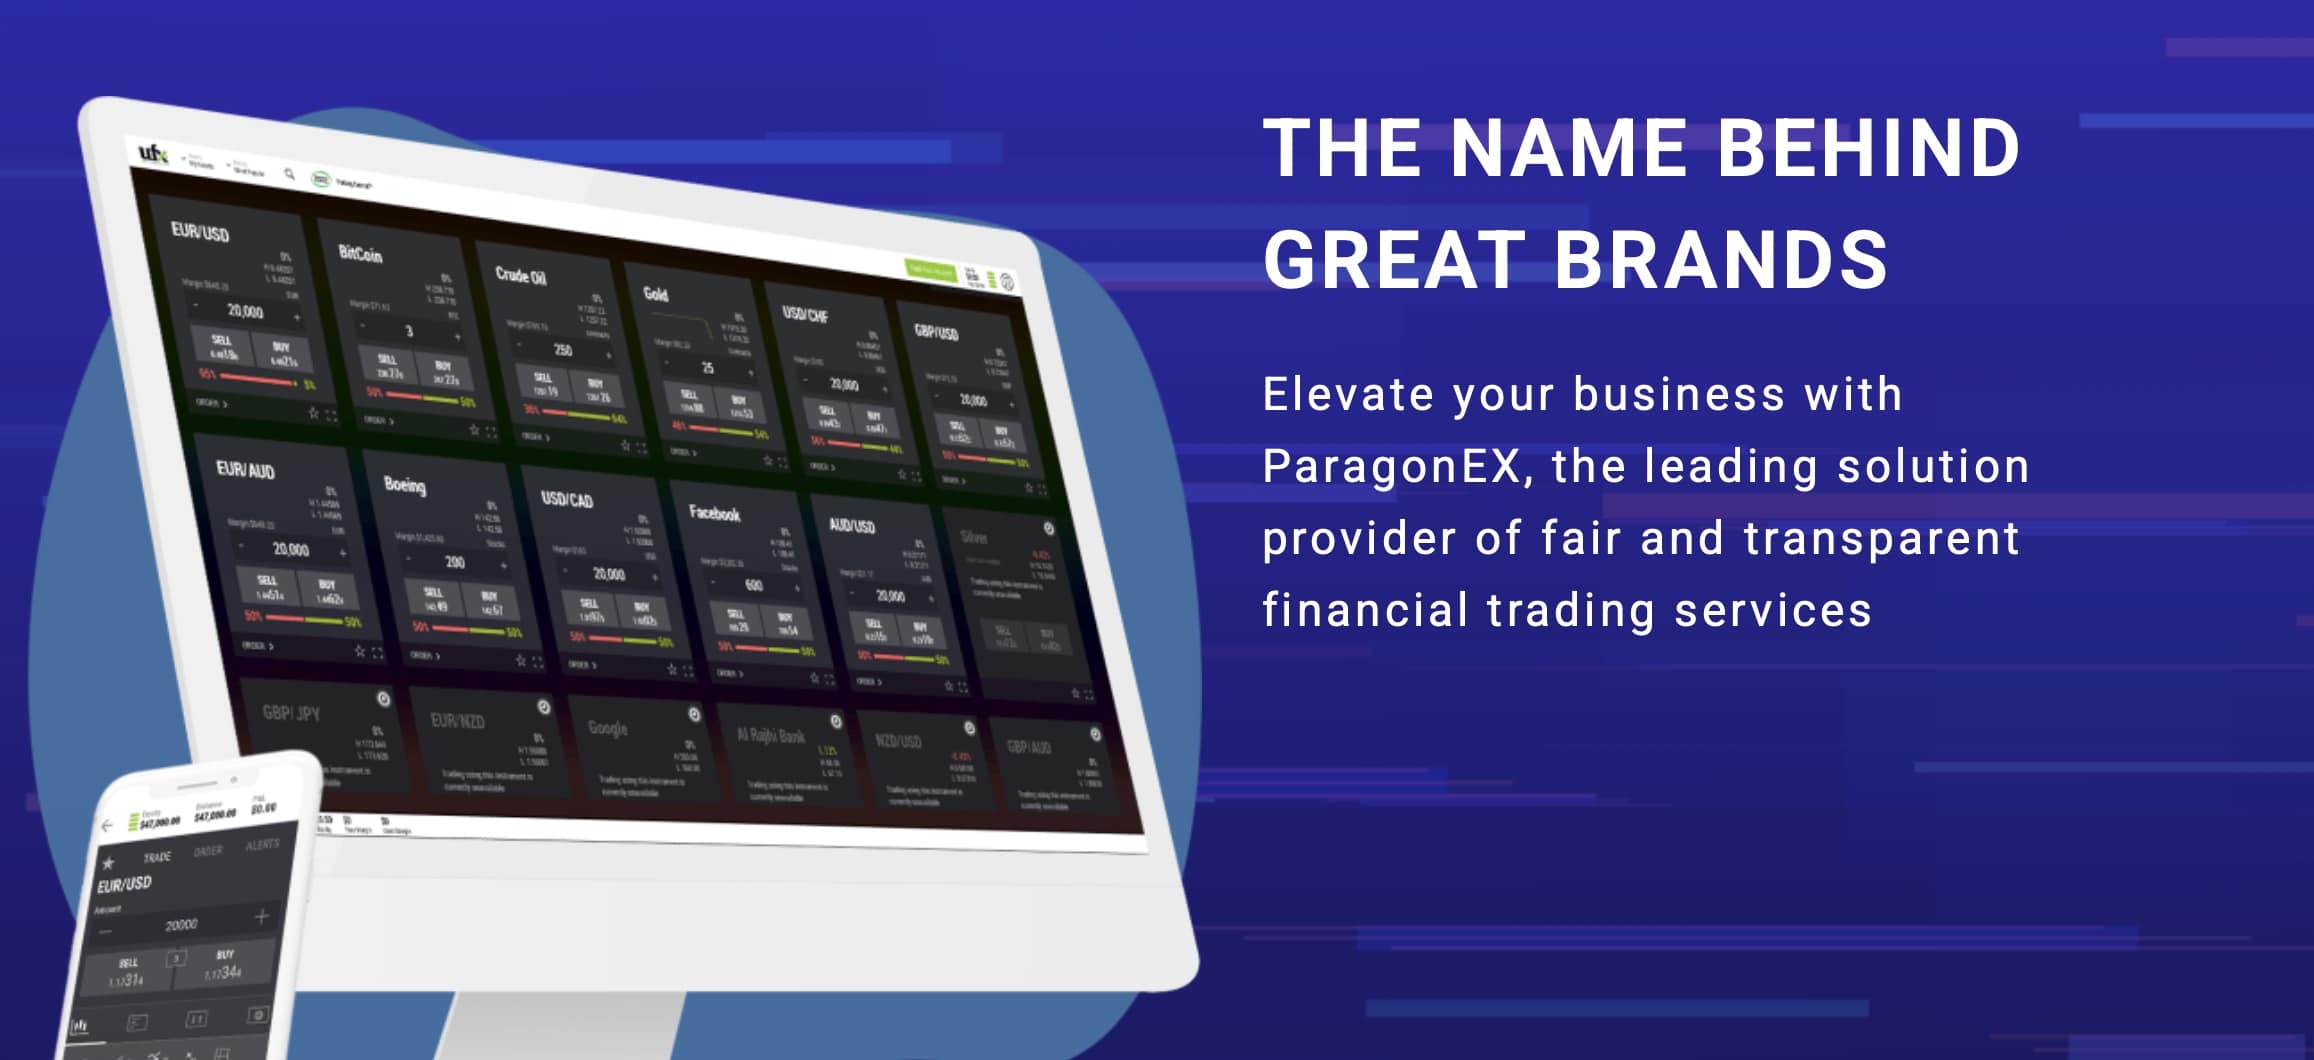 Fintech Provider ParagonEX Announced a Fully Customizable Trading Platform